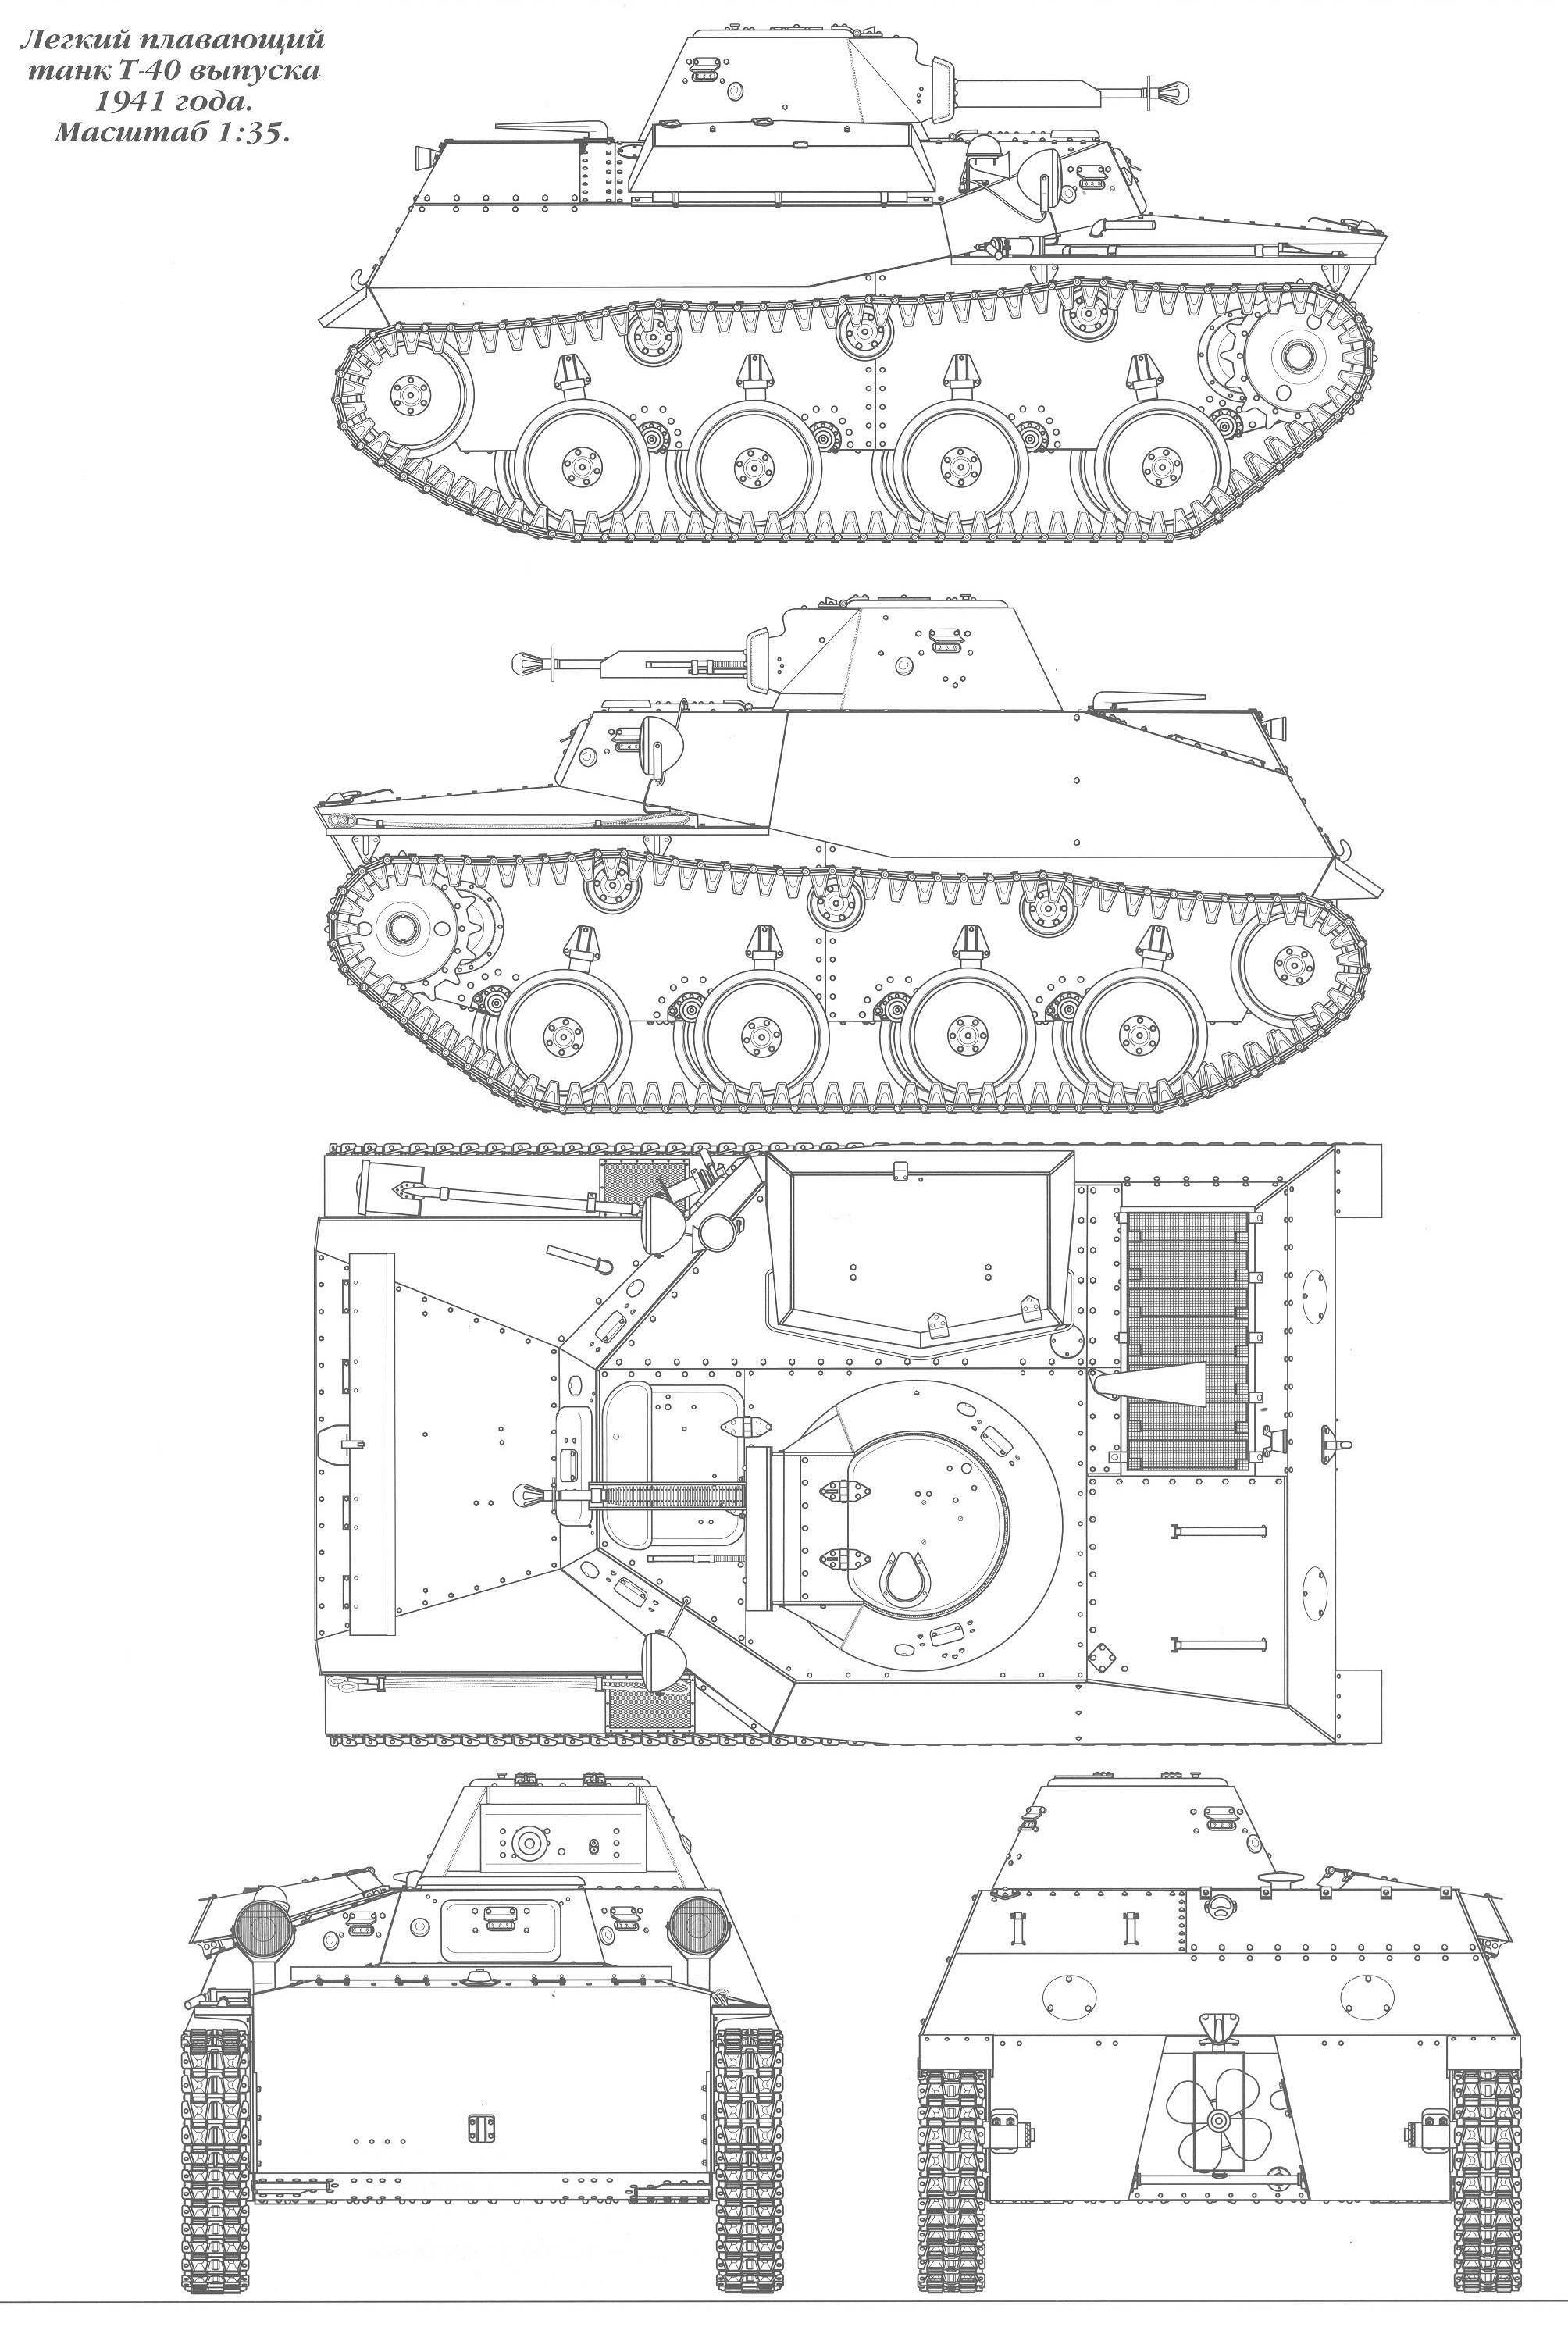 T-40 blueprint